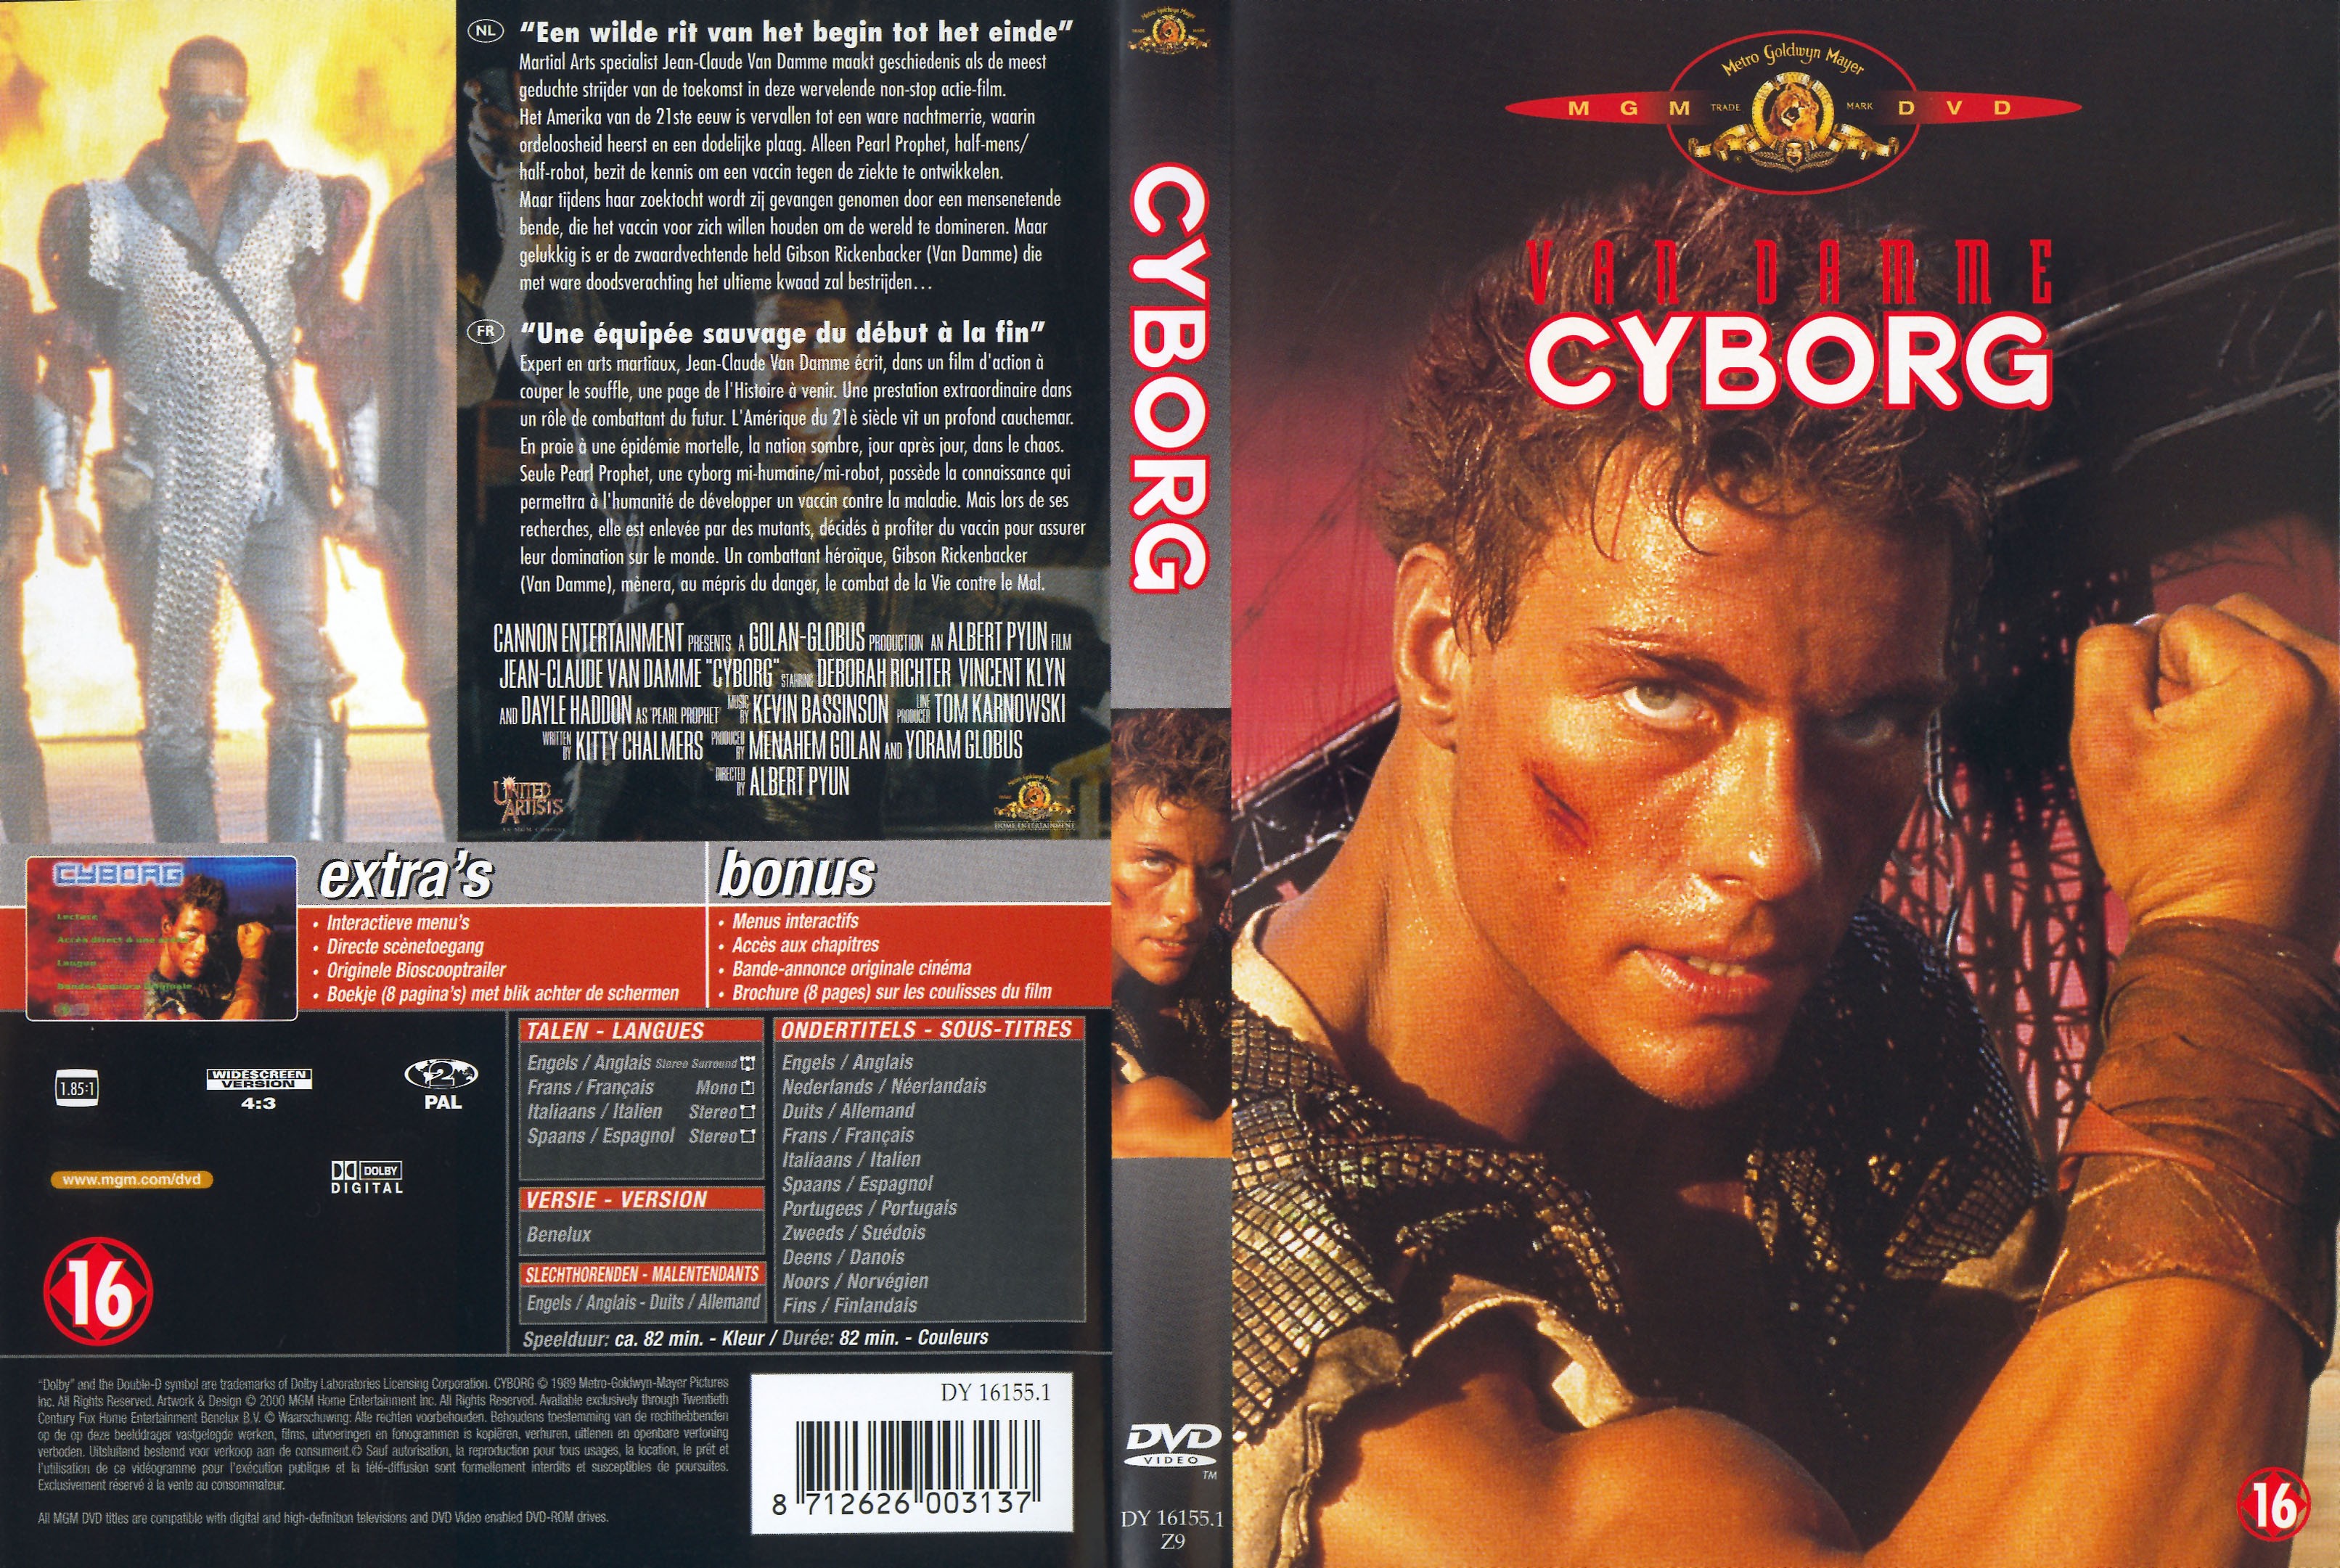 Jaquette DVD Cyborg